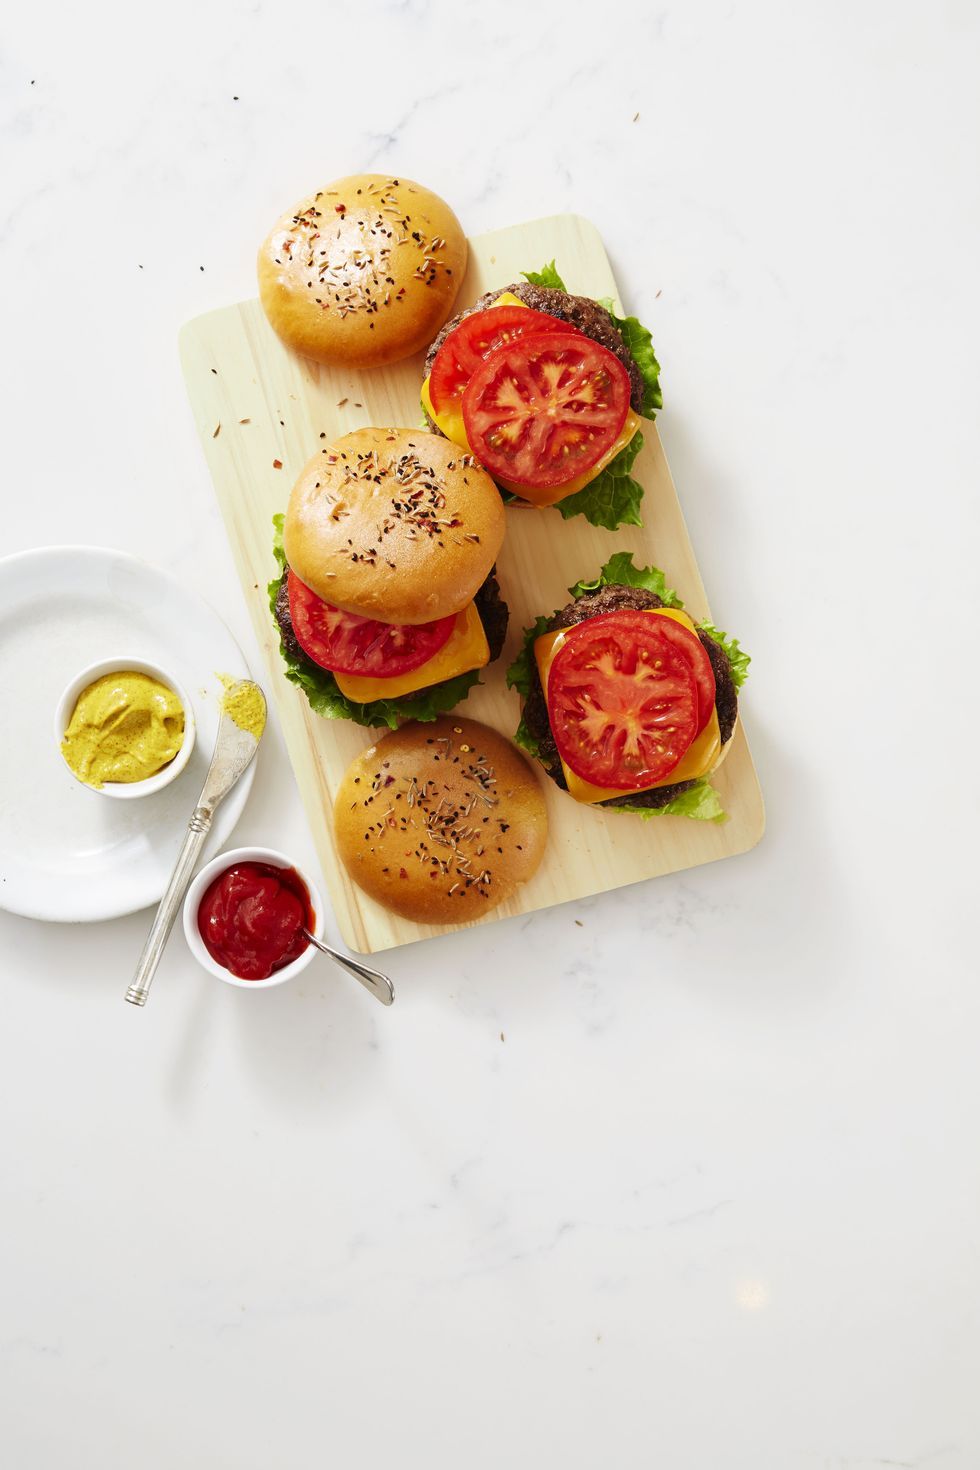 33 Best Burger Recipes - Easy Homemade Hamburger Ideas